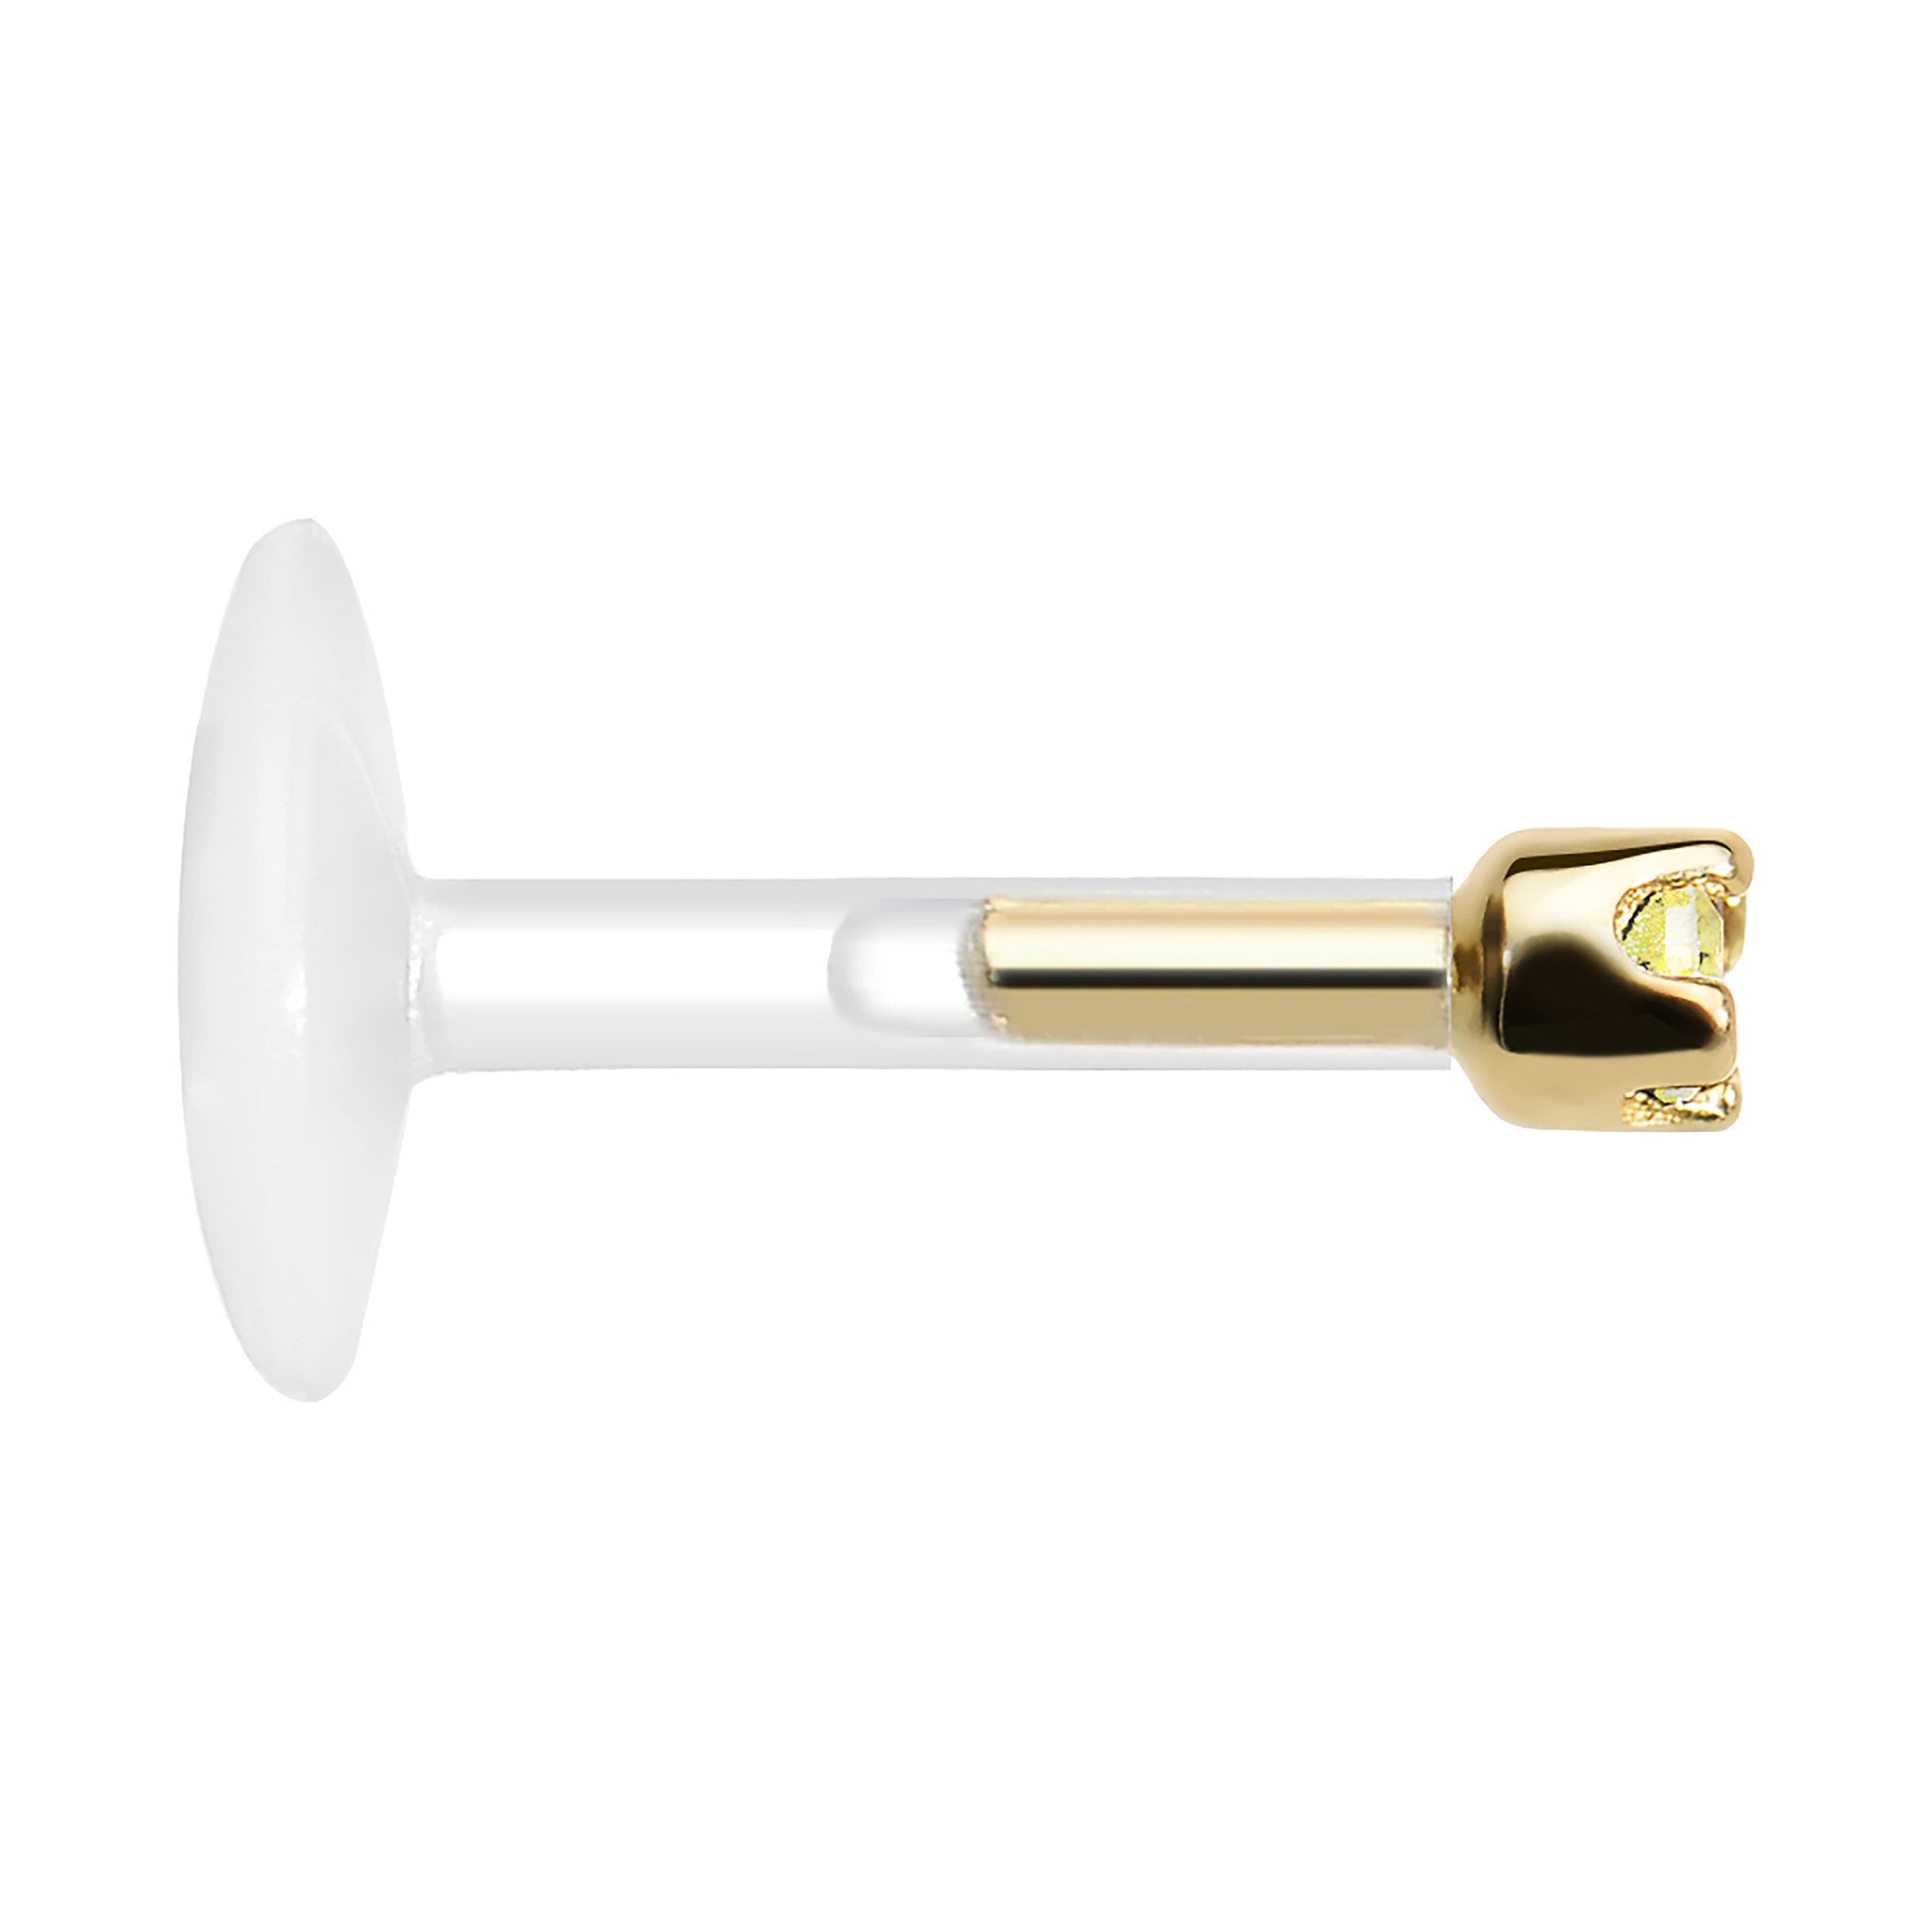 16 Gauge 1/4 14KT Yellow Gold November 1.5mm CZ Bioplast Push in Cartilage Earring